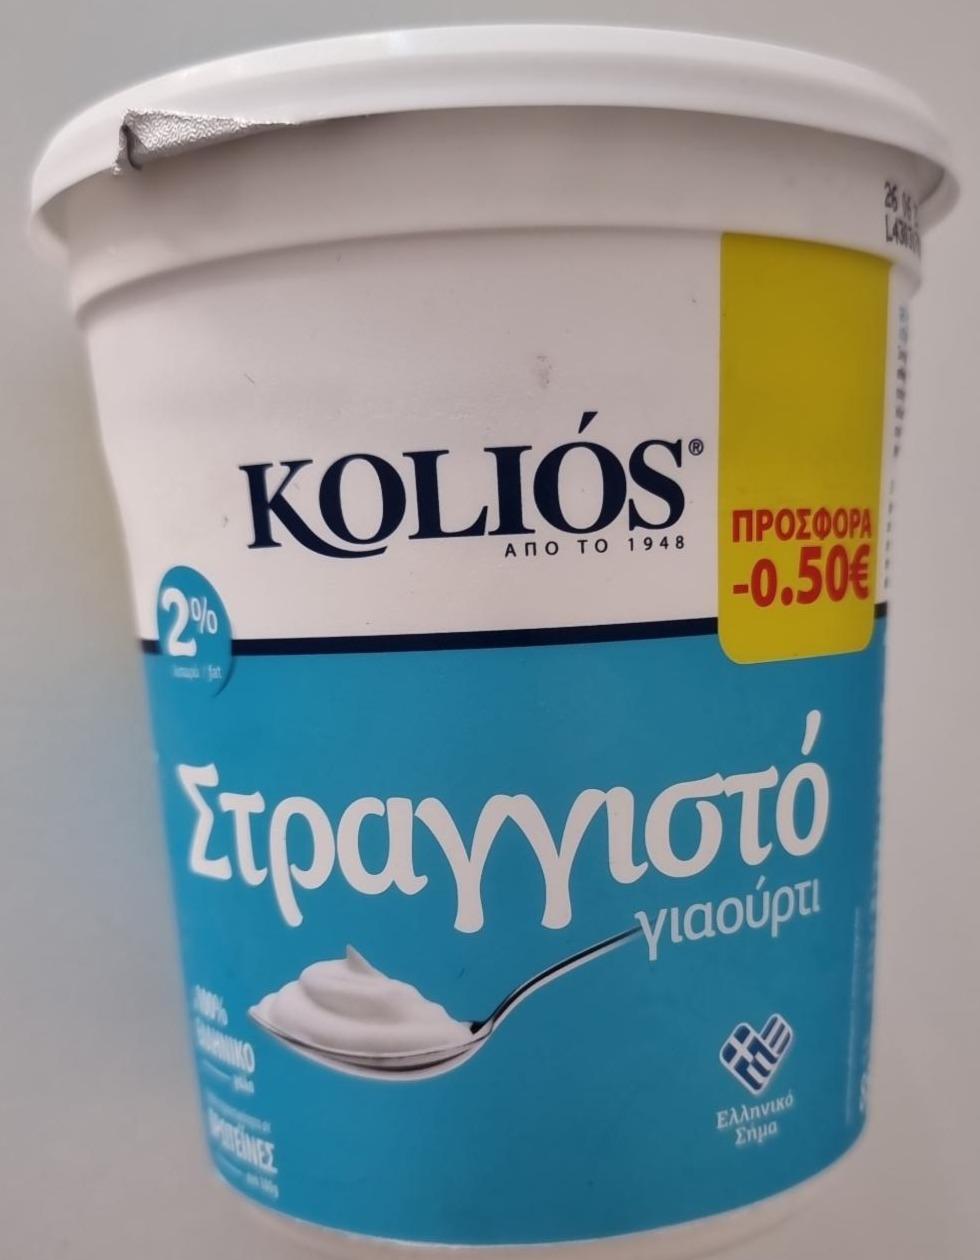 Fotografie - Strained Yogurt 2% Fat Koliós